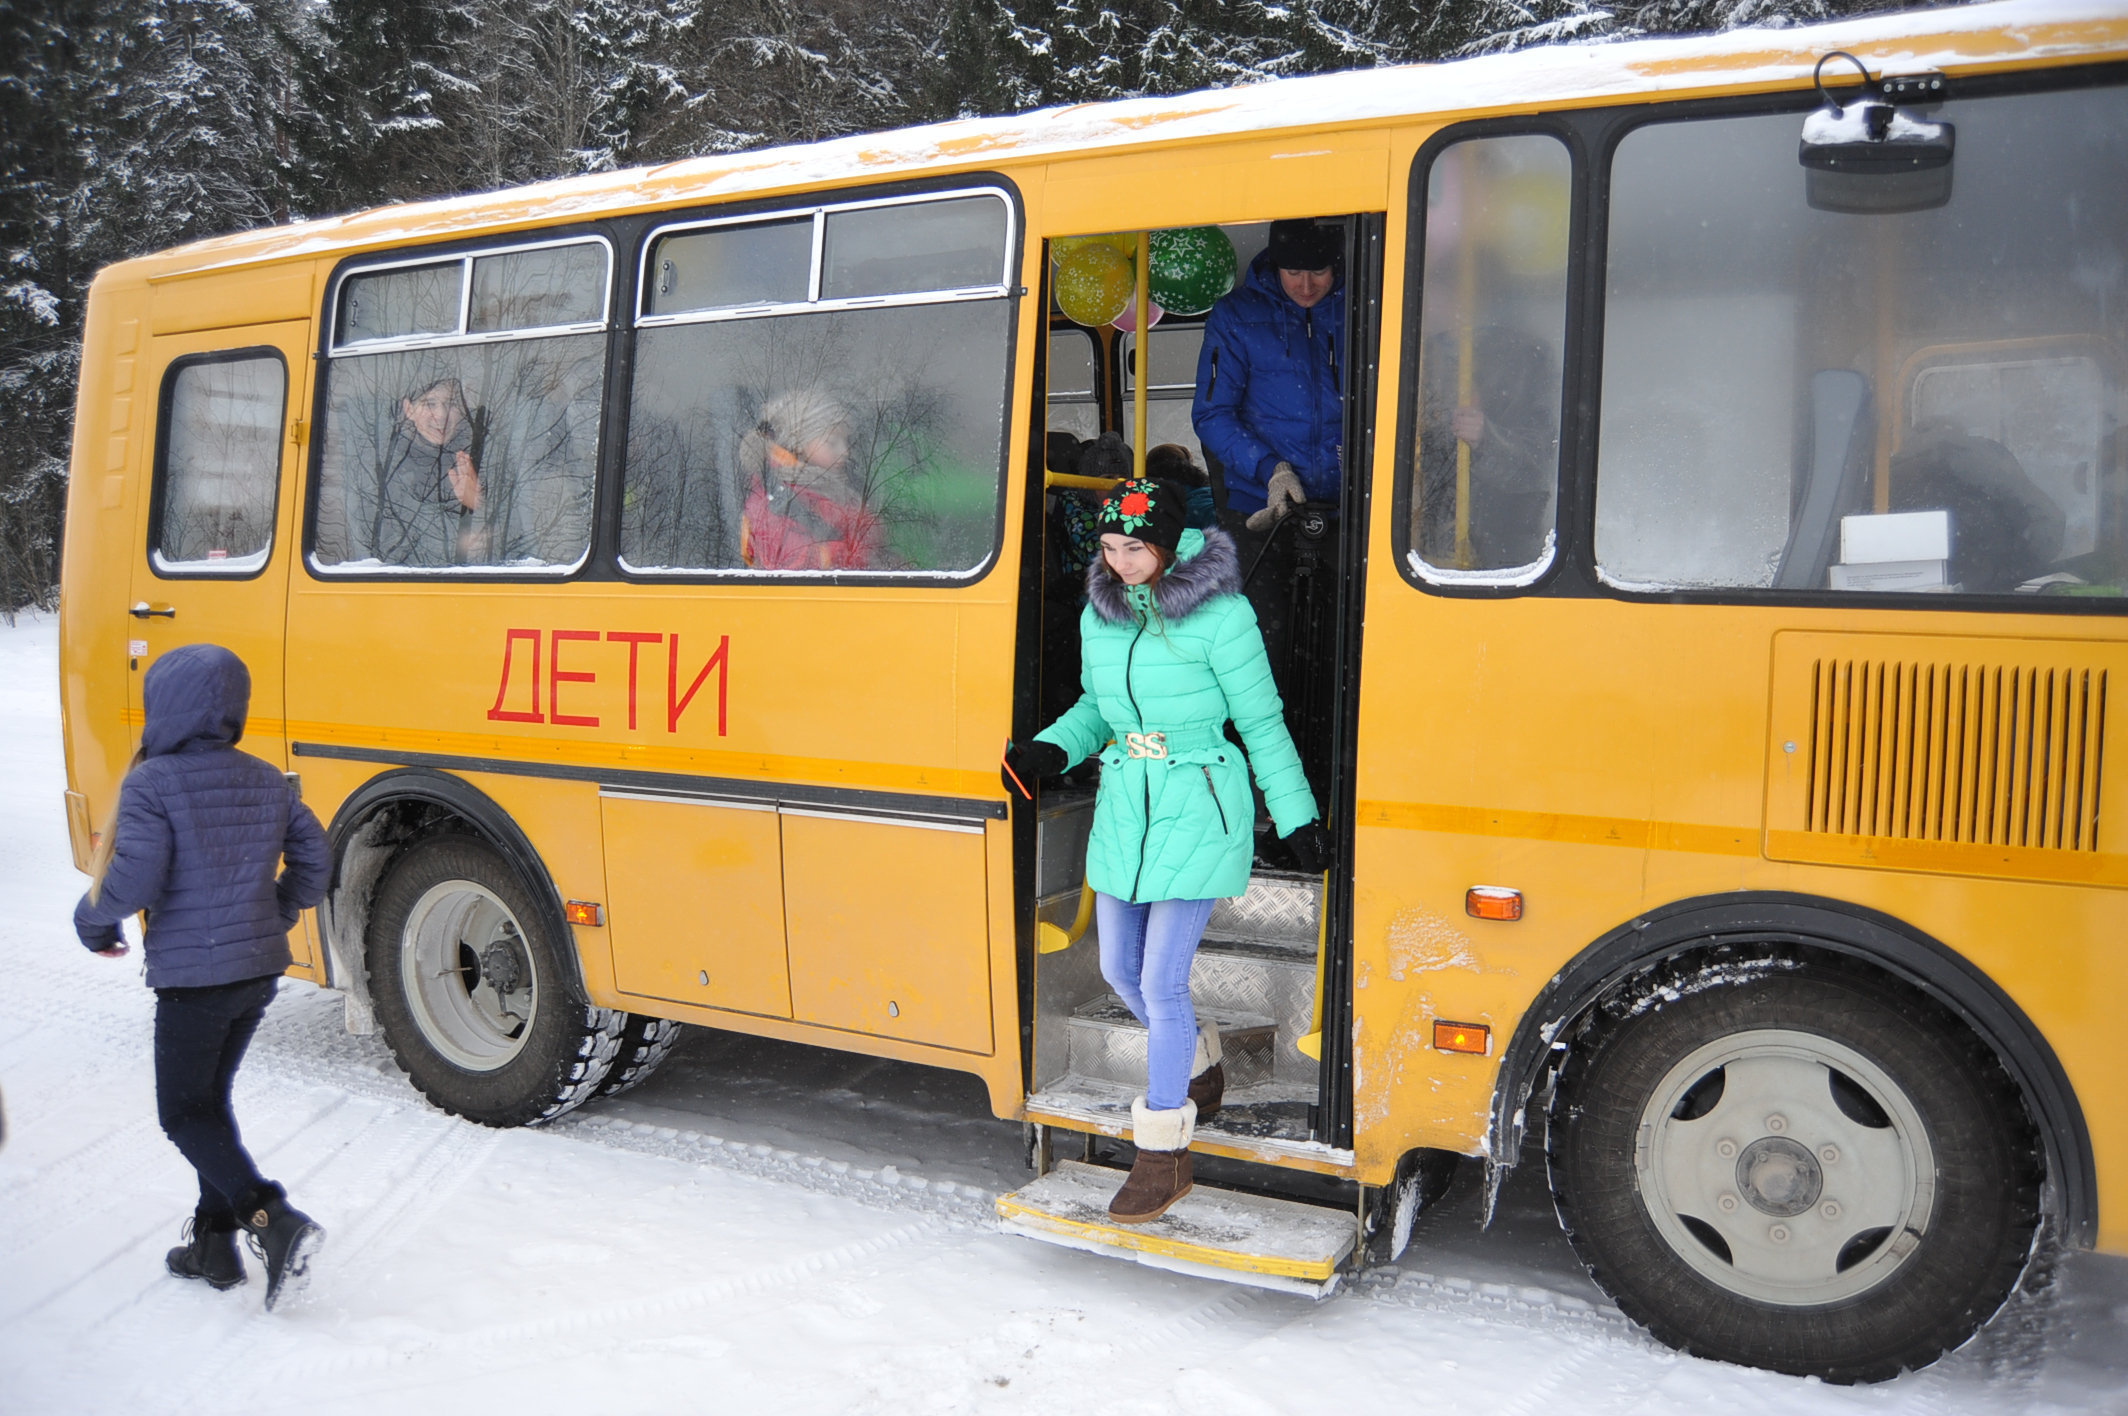 Включи автобус дети. Школьный автобус. Автобус для детей. Школьный автобус ПАЗ. Школьный автобус зимой.